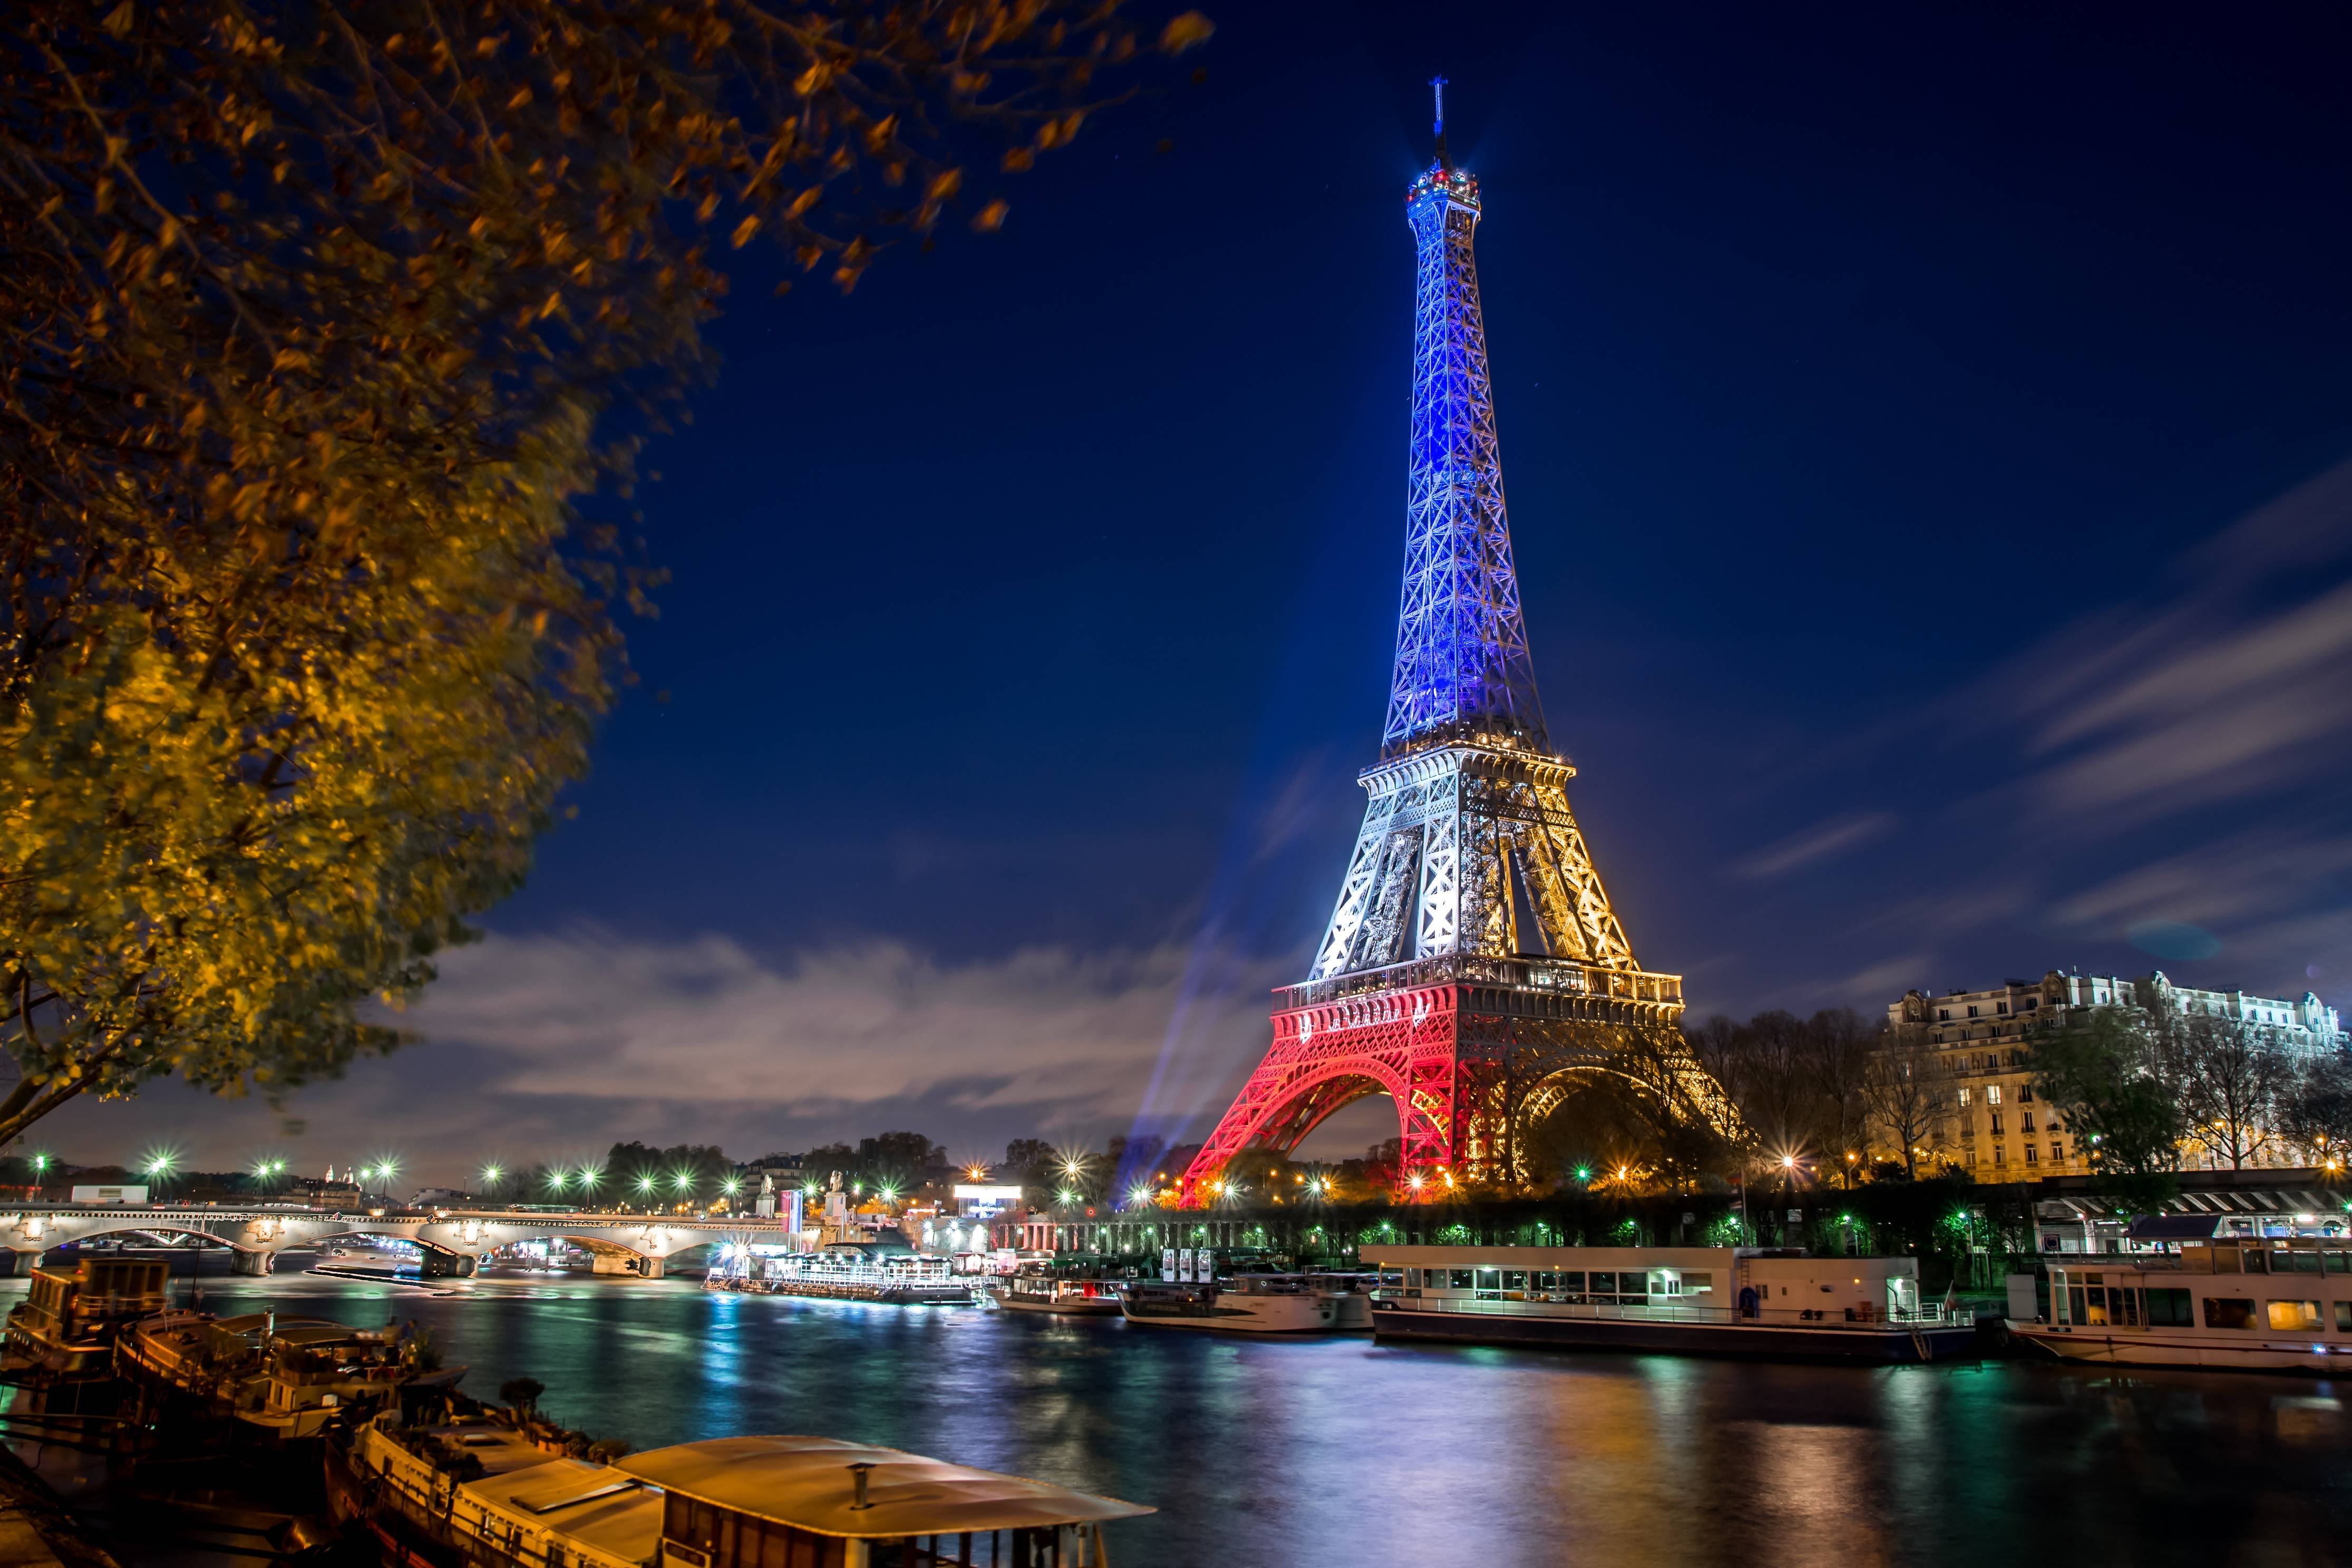 Fr страна. Эйфелева башня в Париже. Эйфель башня Франция. Франция Эйфелева башня фото. Эйфелева башня в центре Парижа.